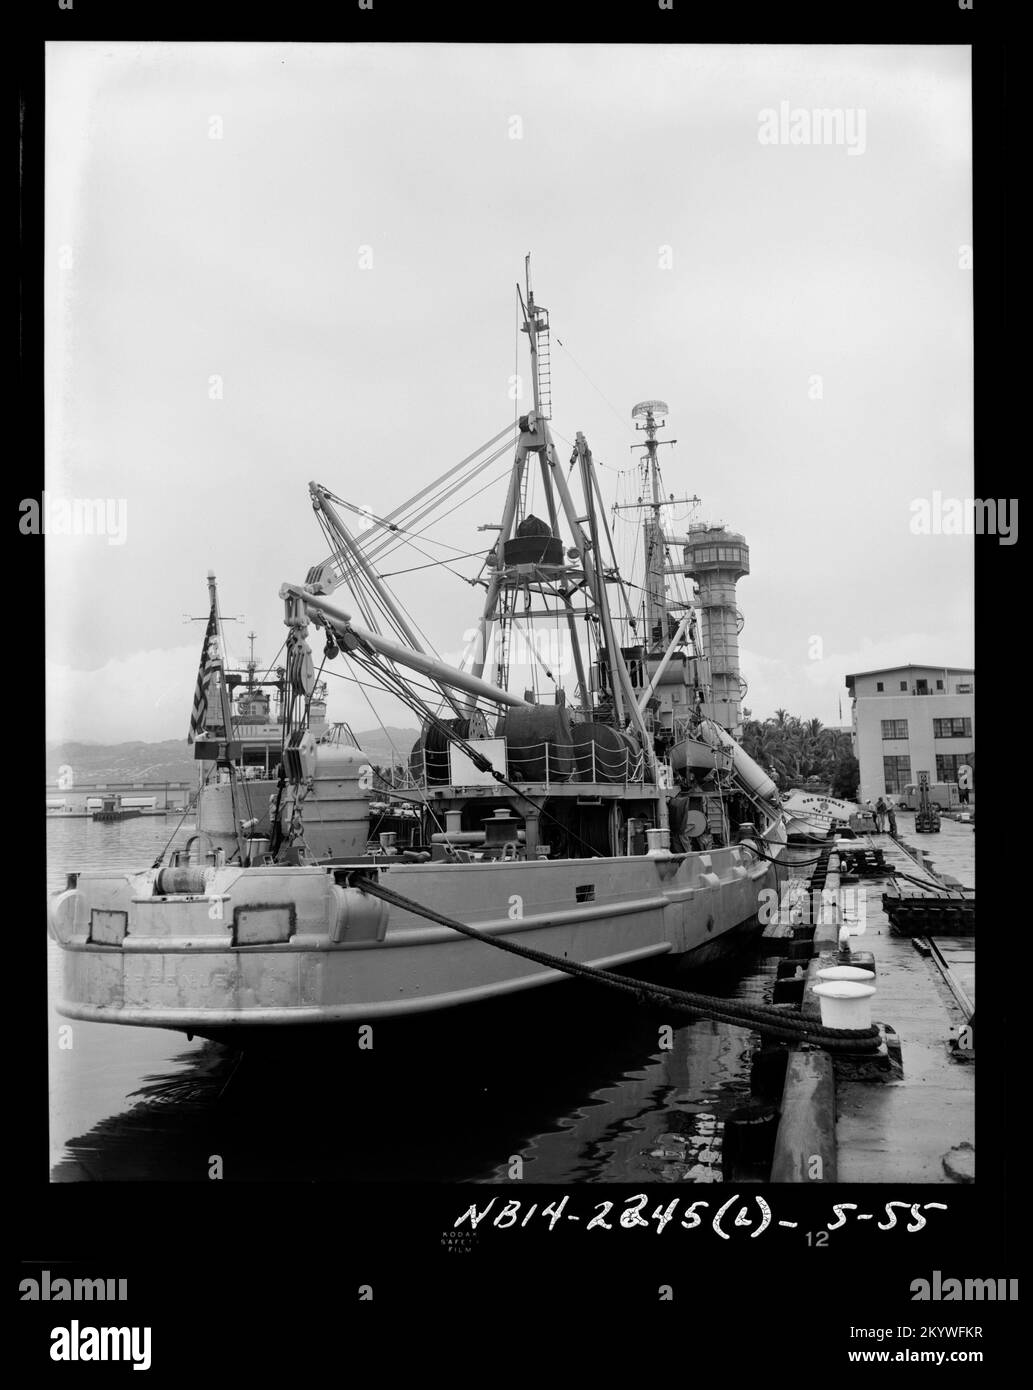 ASR-10 Greenlet , Ships, Naval Vessels, Boats, Naval History, Navy Stock Photo